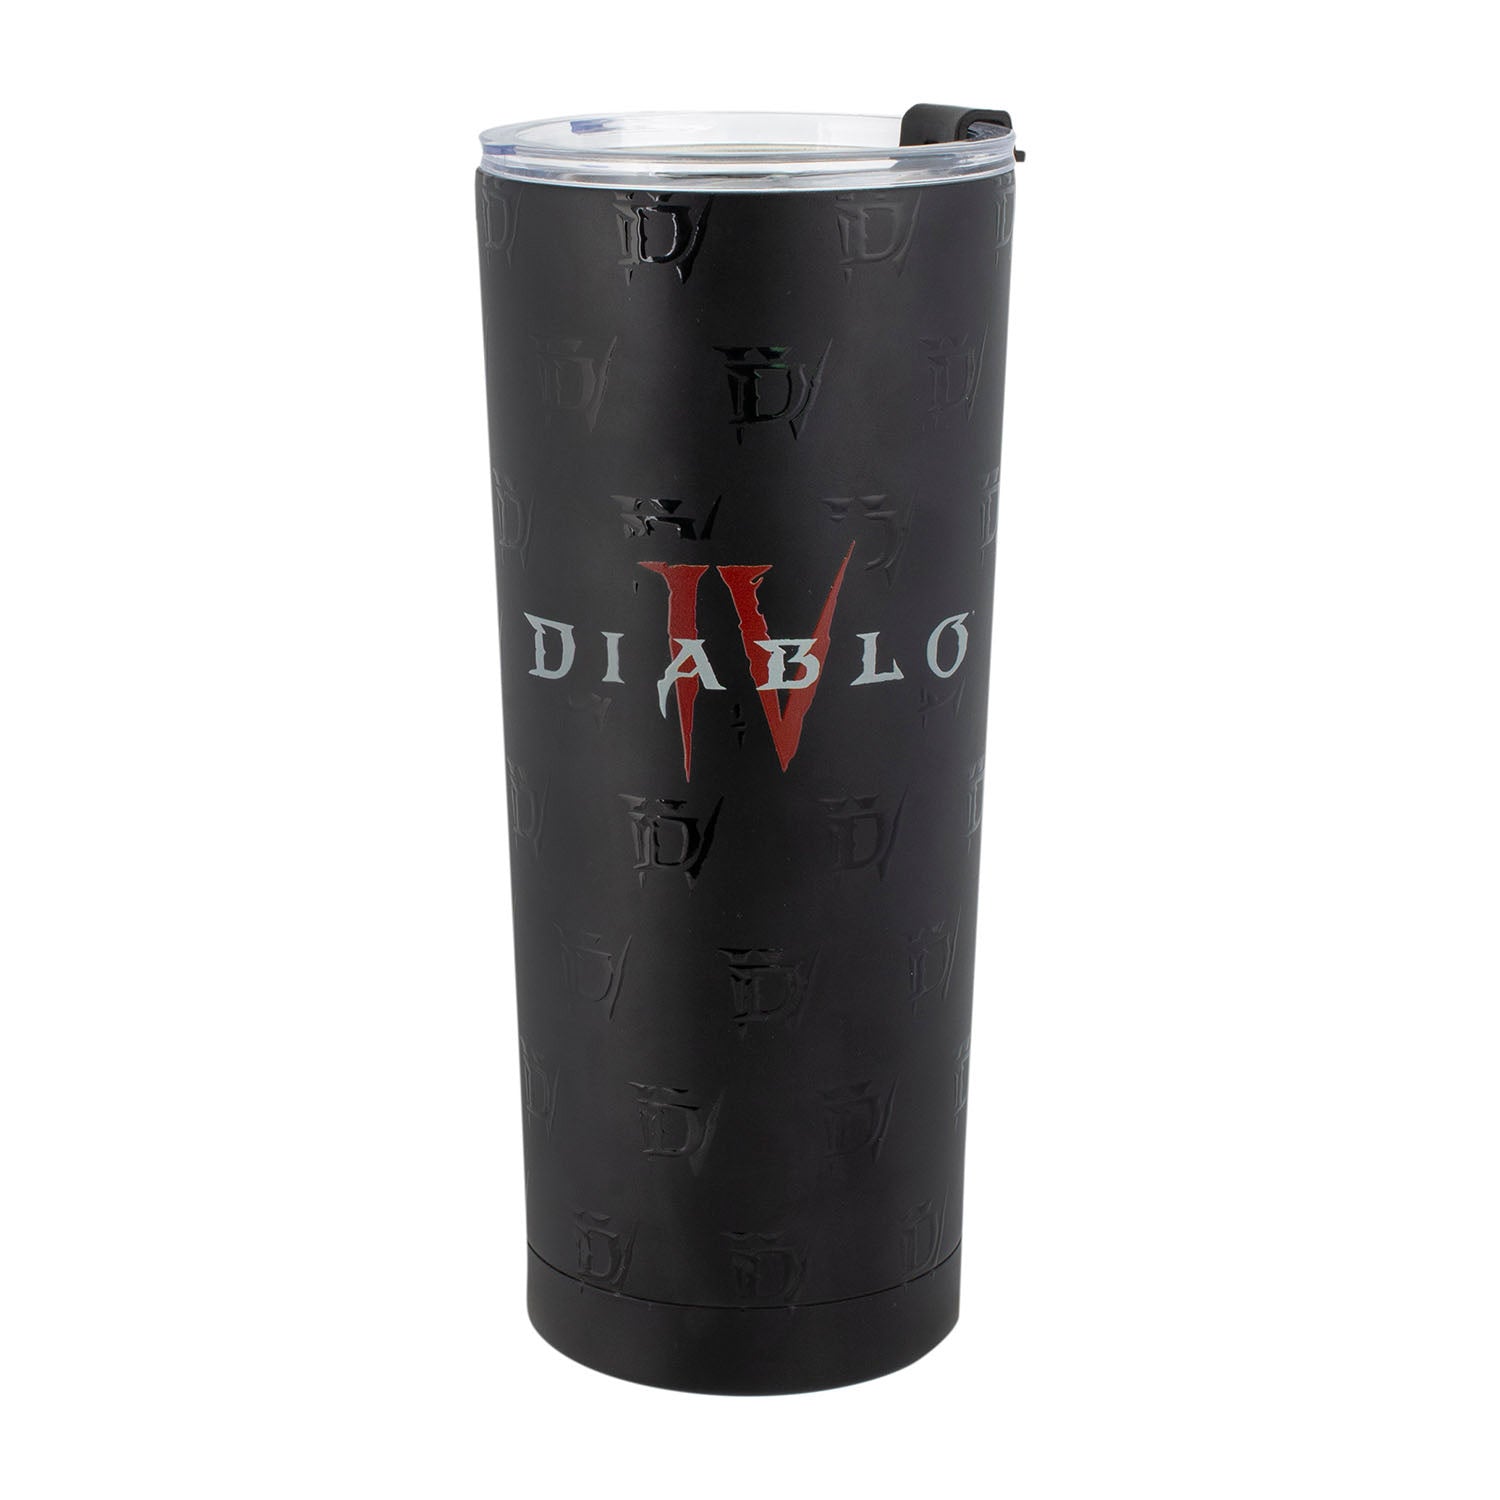 Diablo IV 650ml Stainless Steel Tumbler in Black - Front View